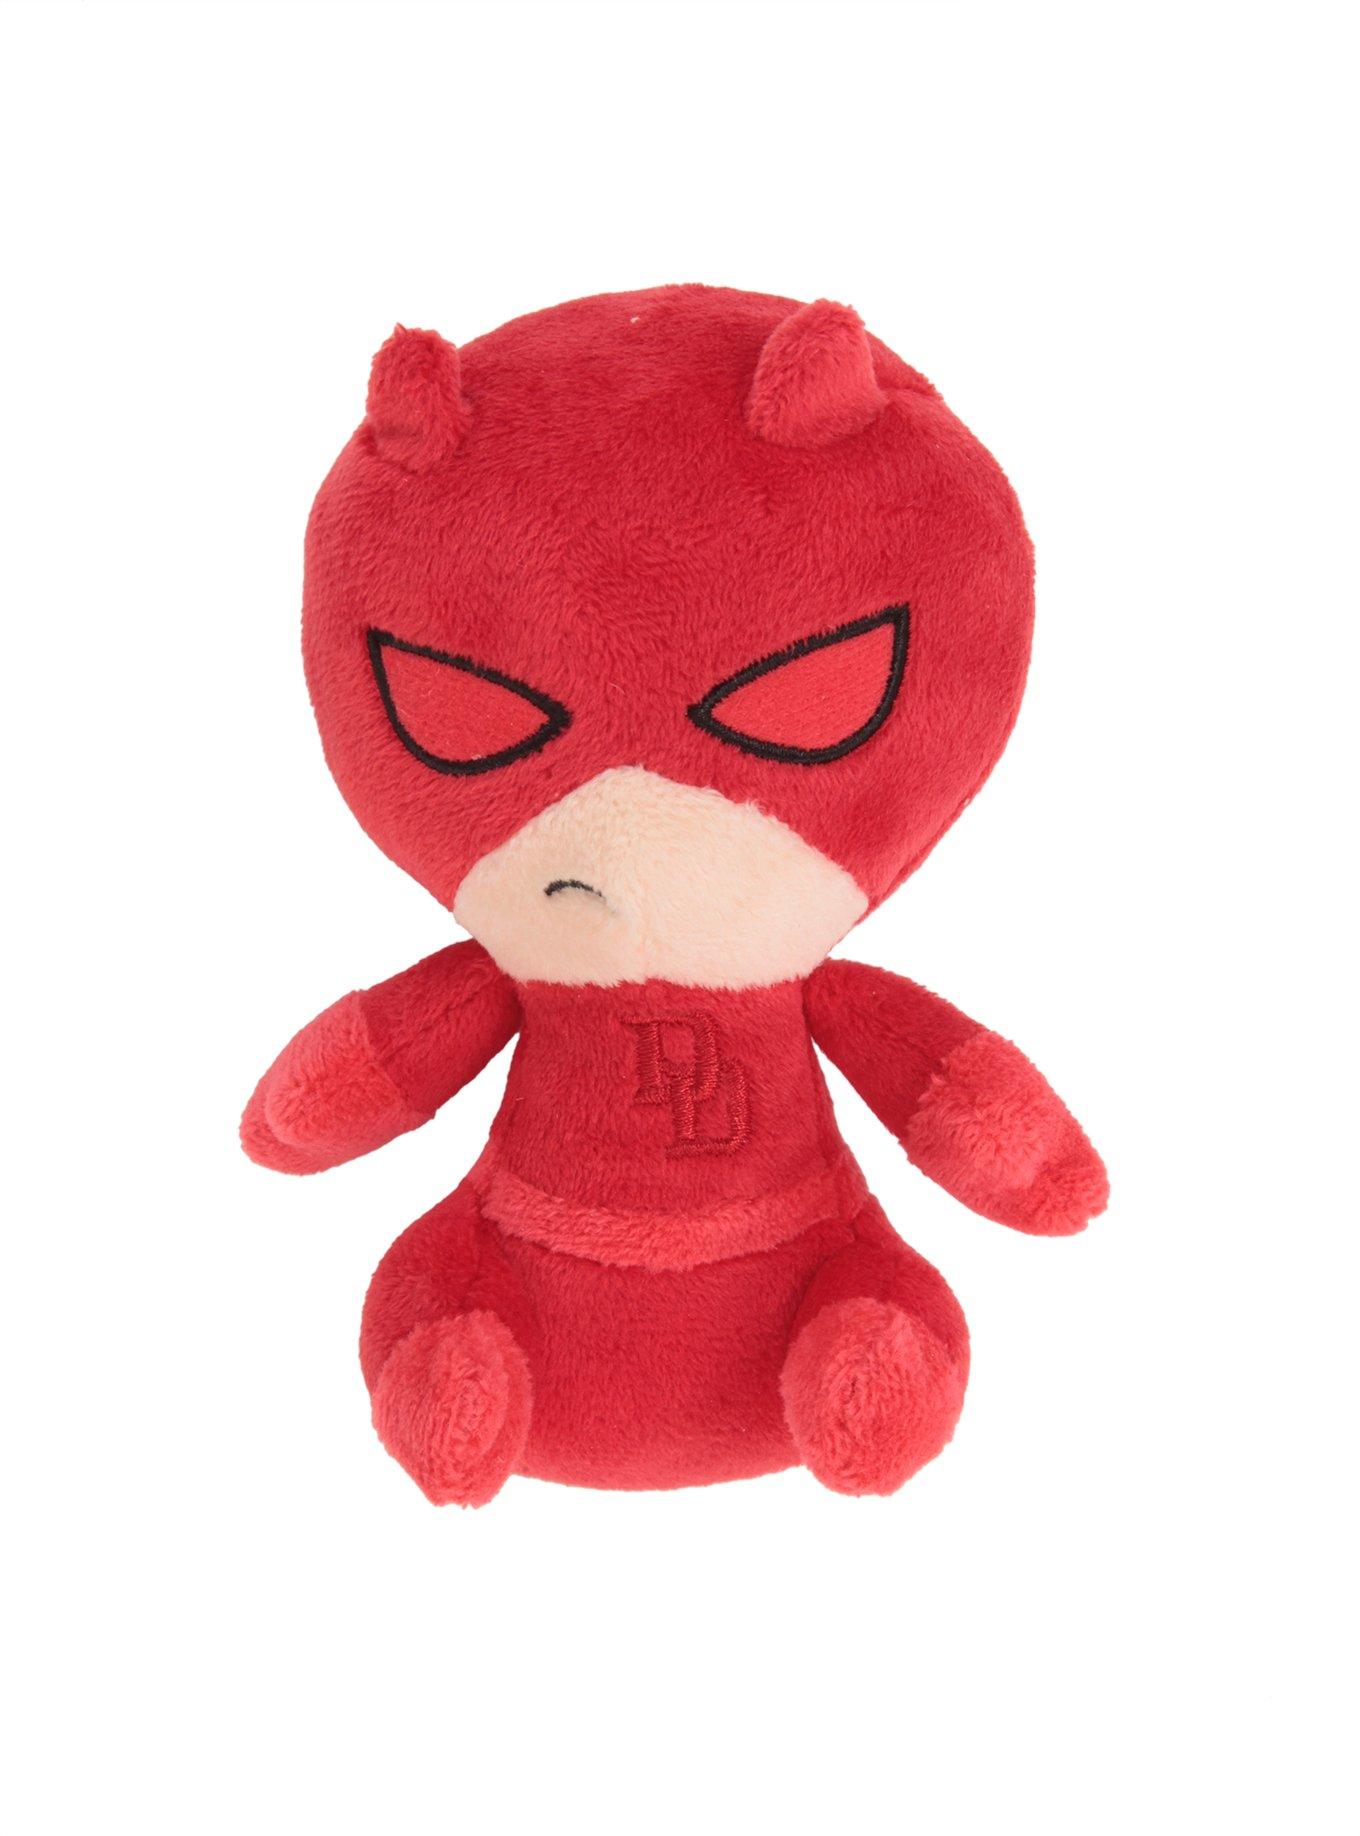 marvel superhero movie comic plush toy Daredevil bear